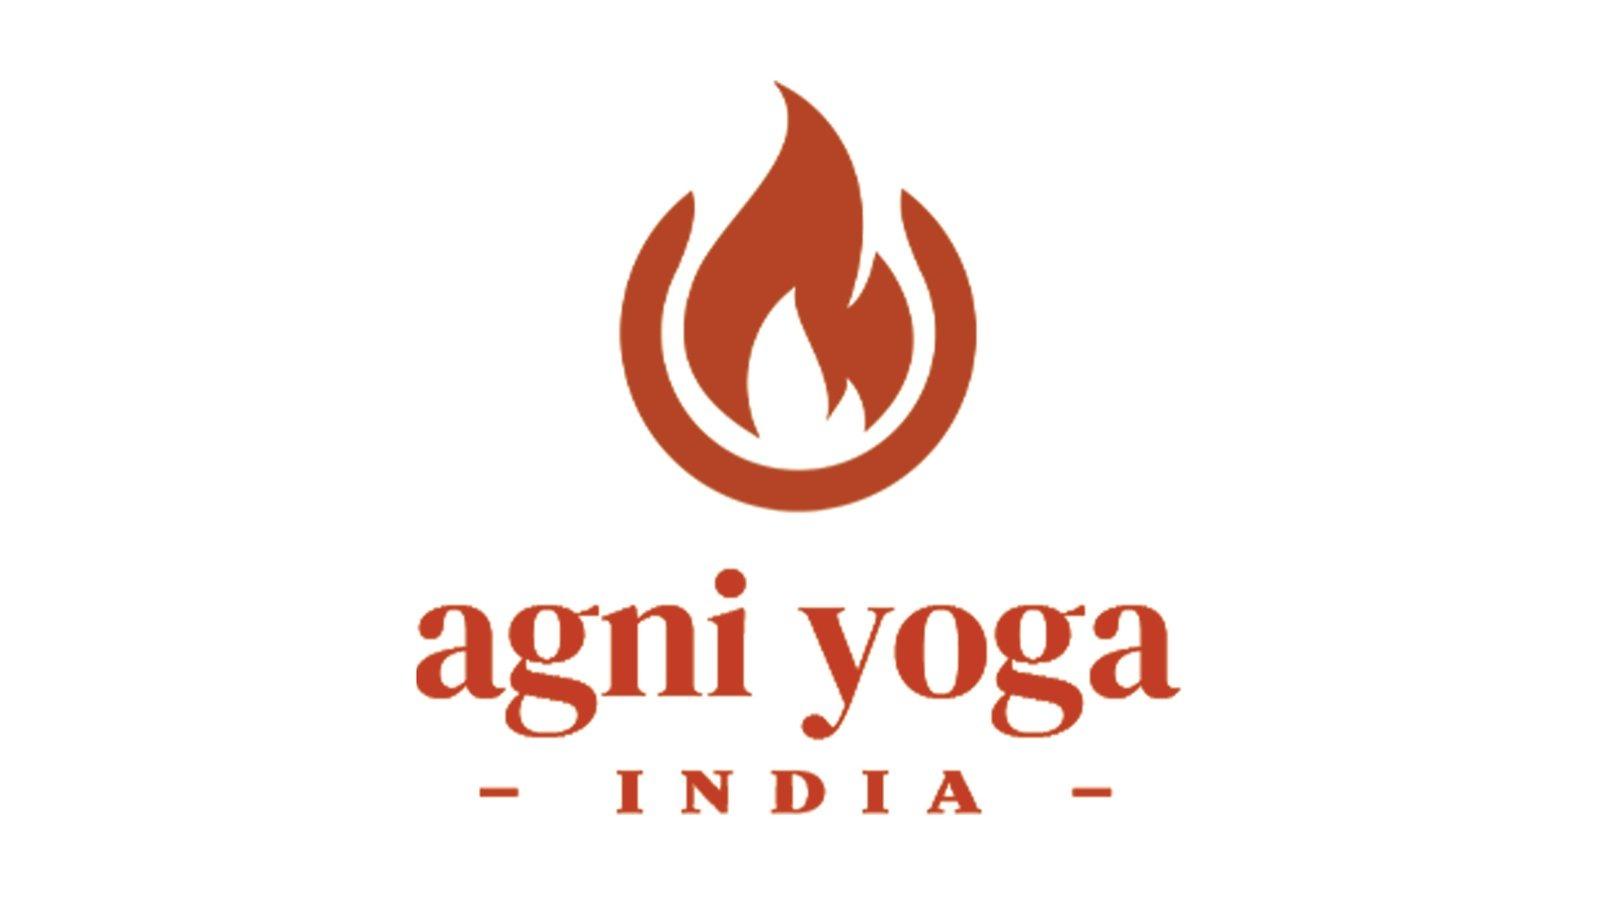 Agniyoga India